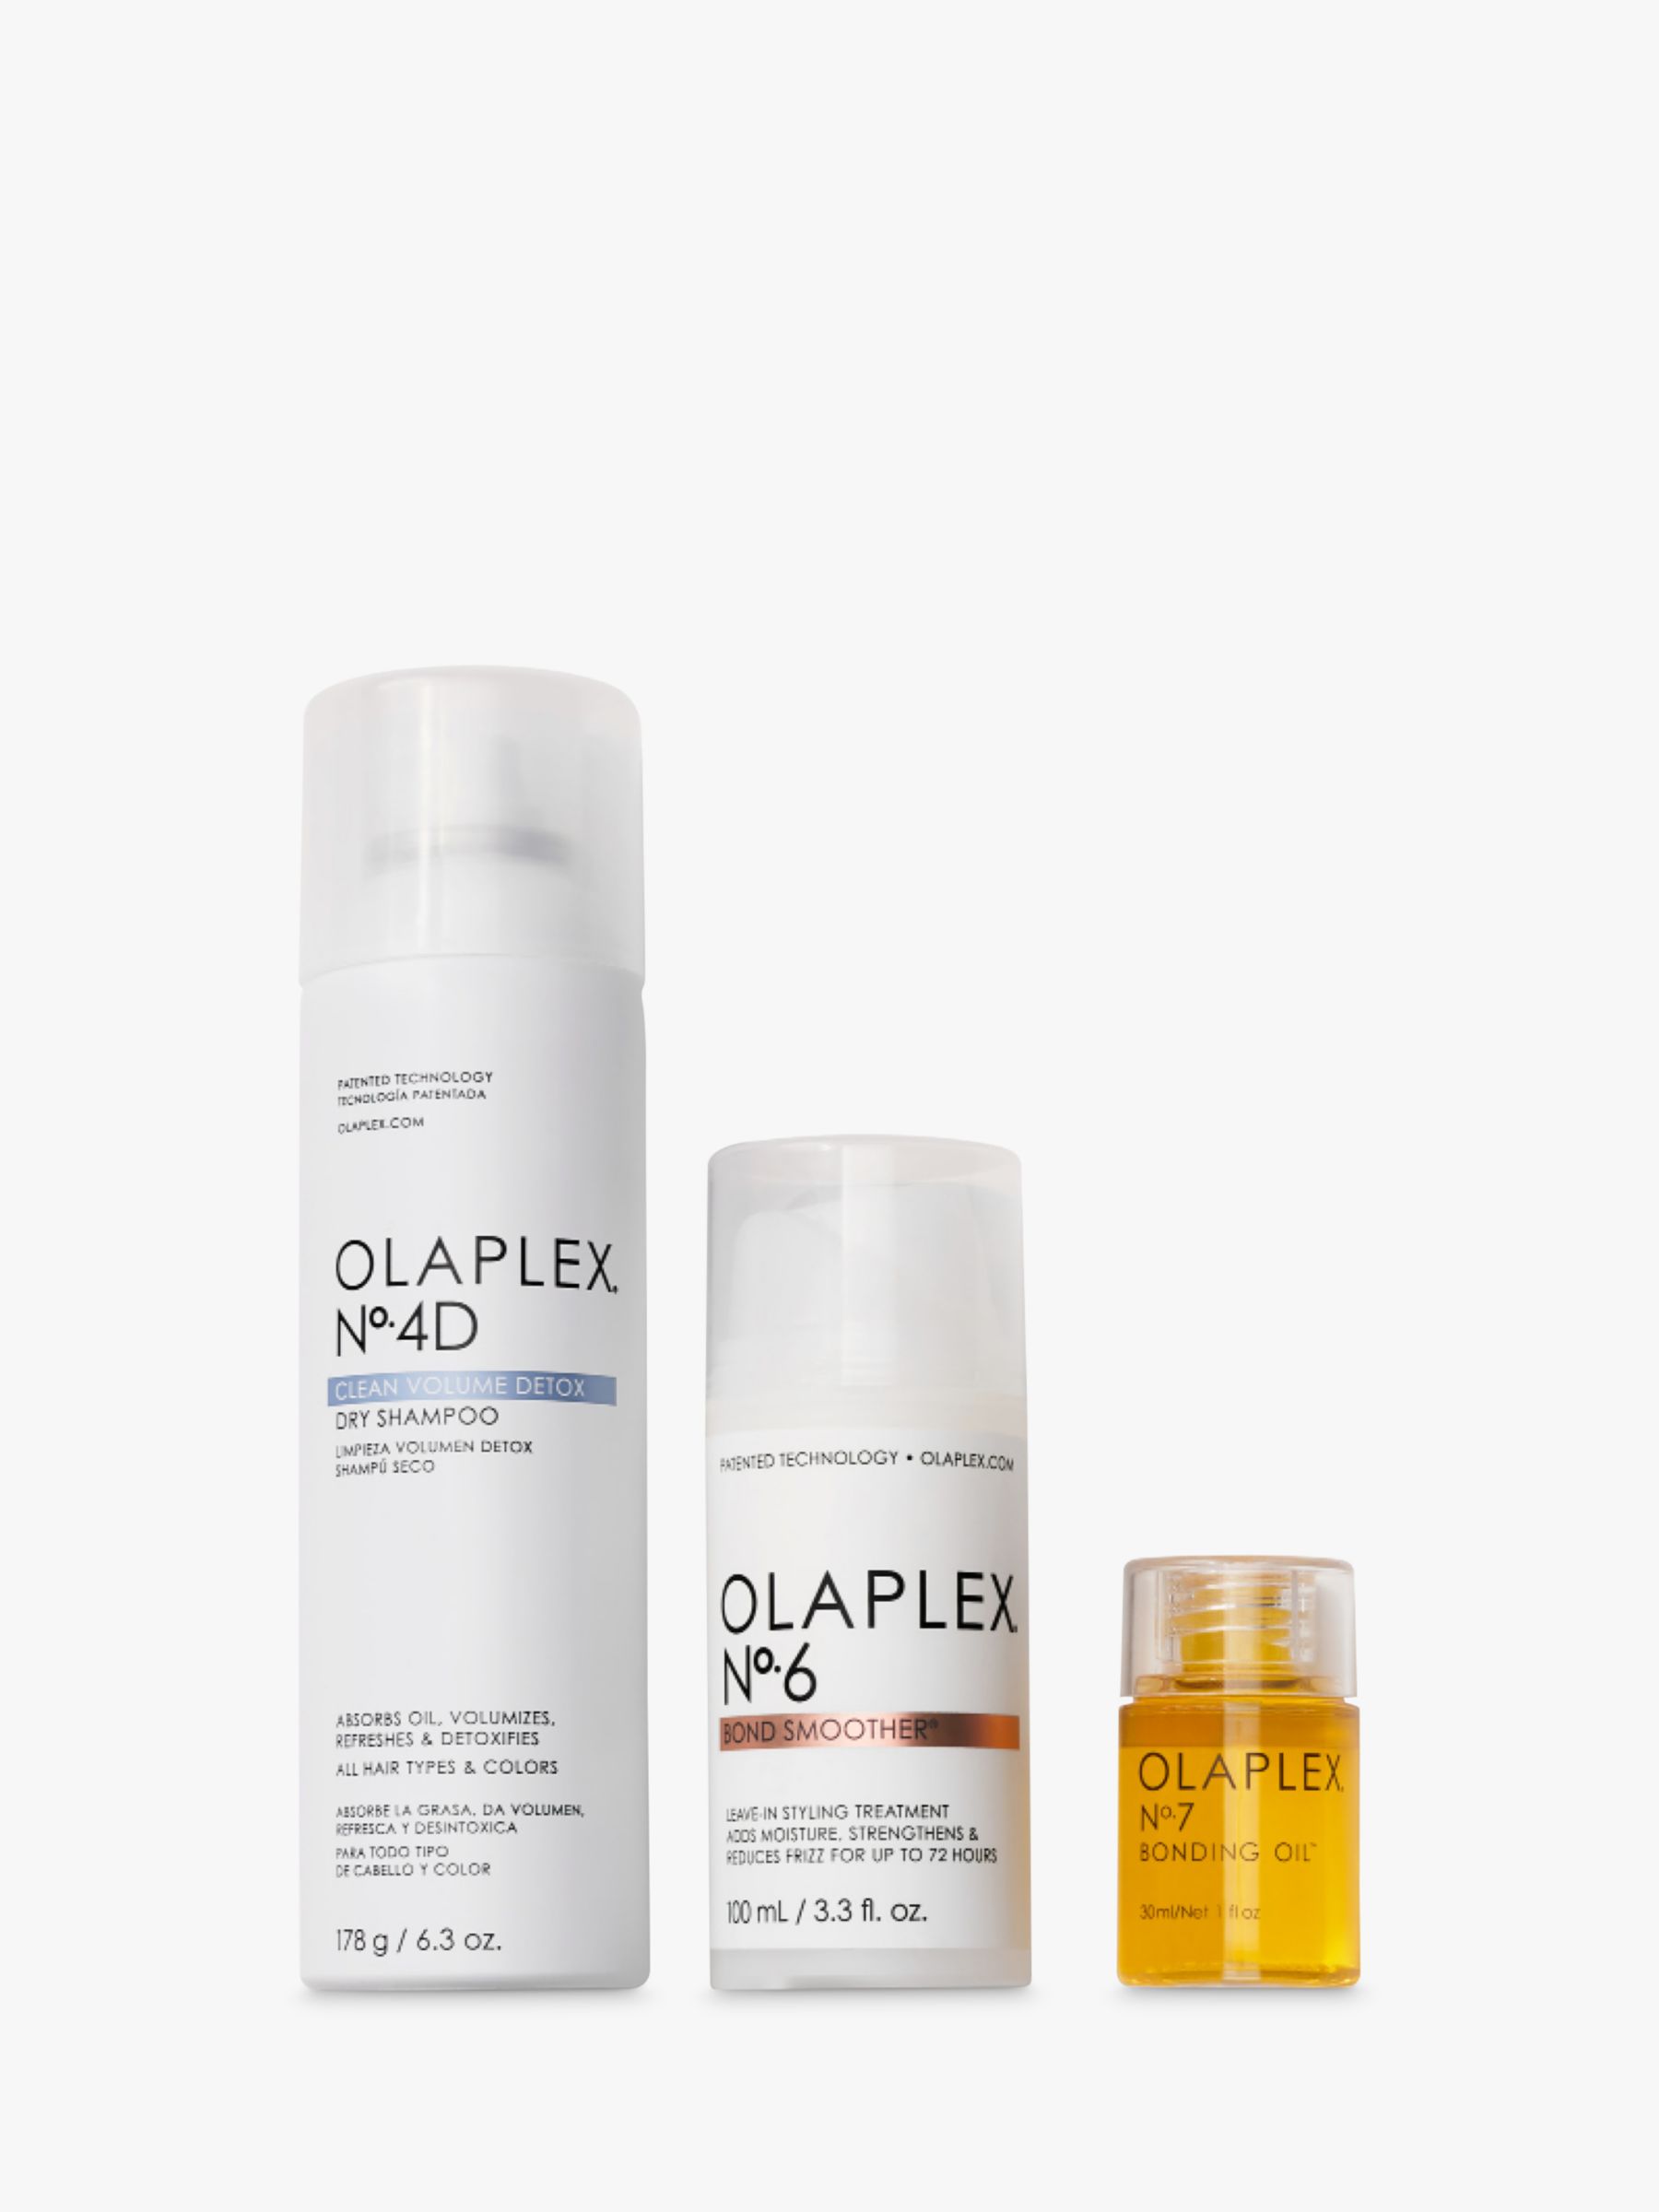 Olaplex No.4D Clean Volume Detox Dry Shampoo, 250ml 6